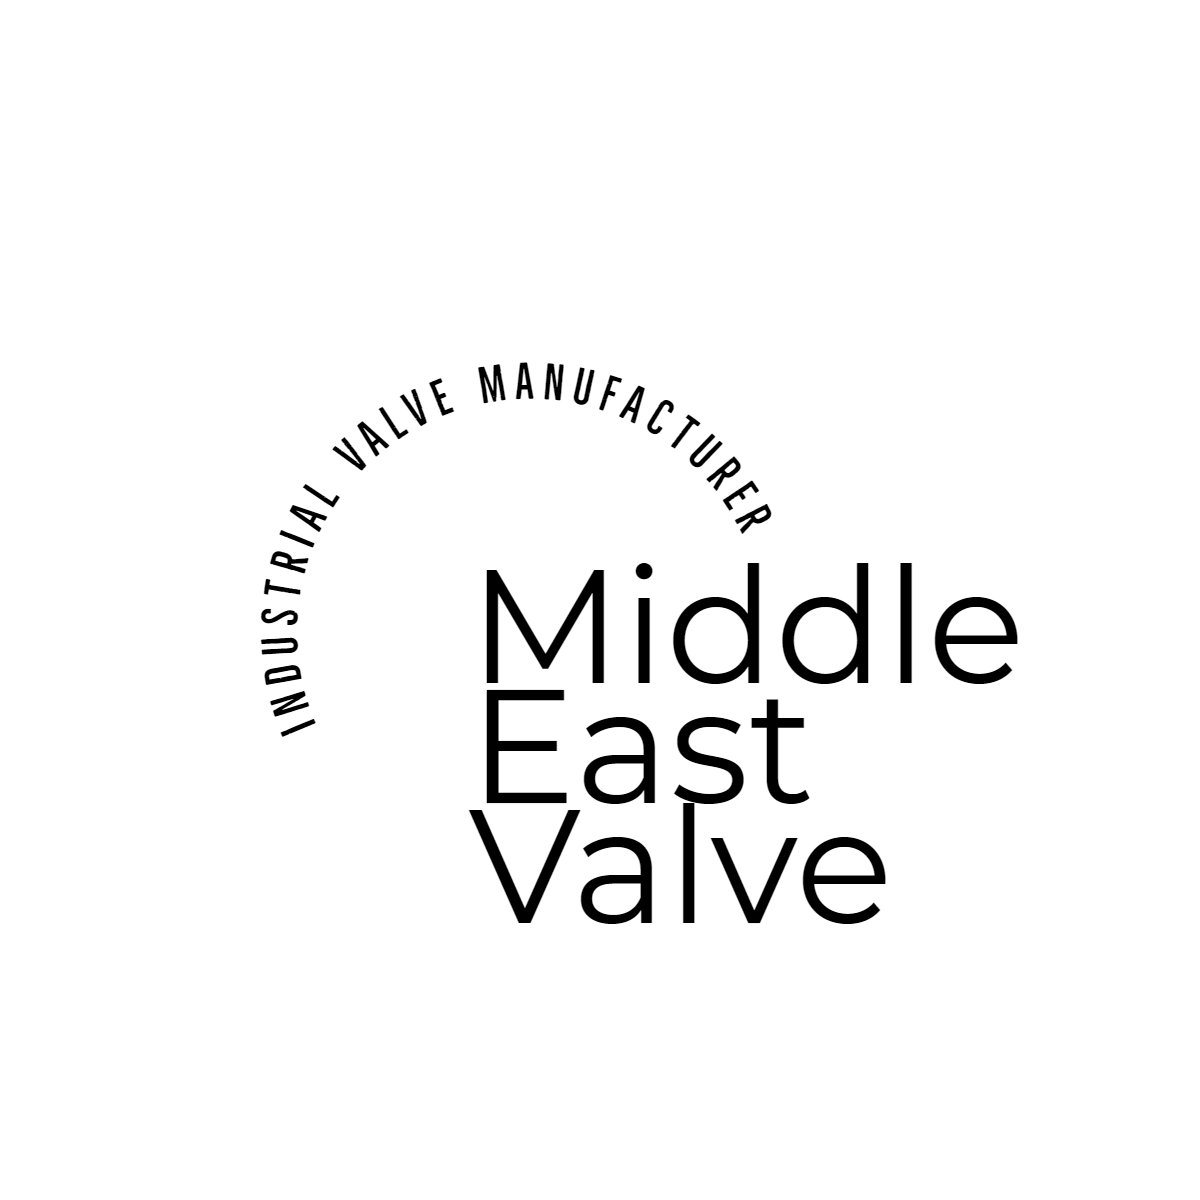 Middle-East-Valve-logos_black-ecd59683